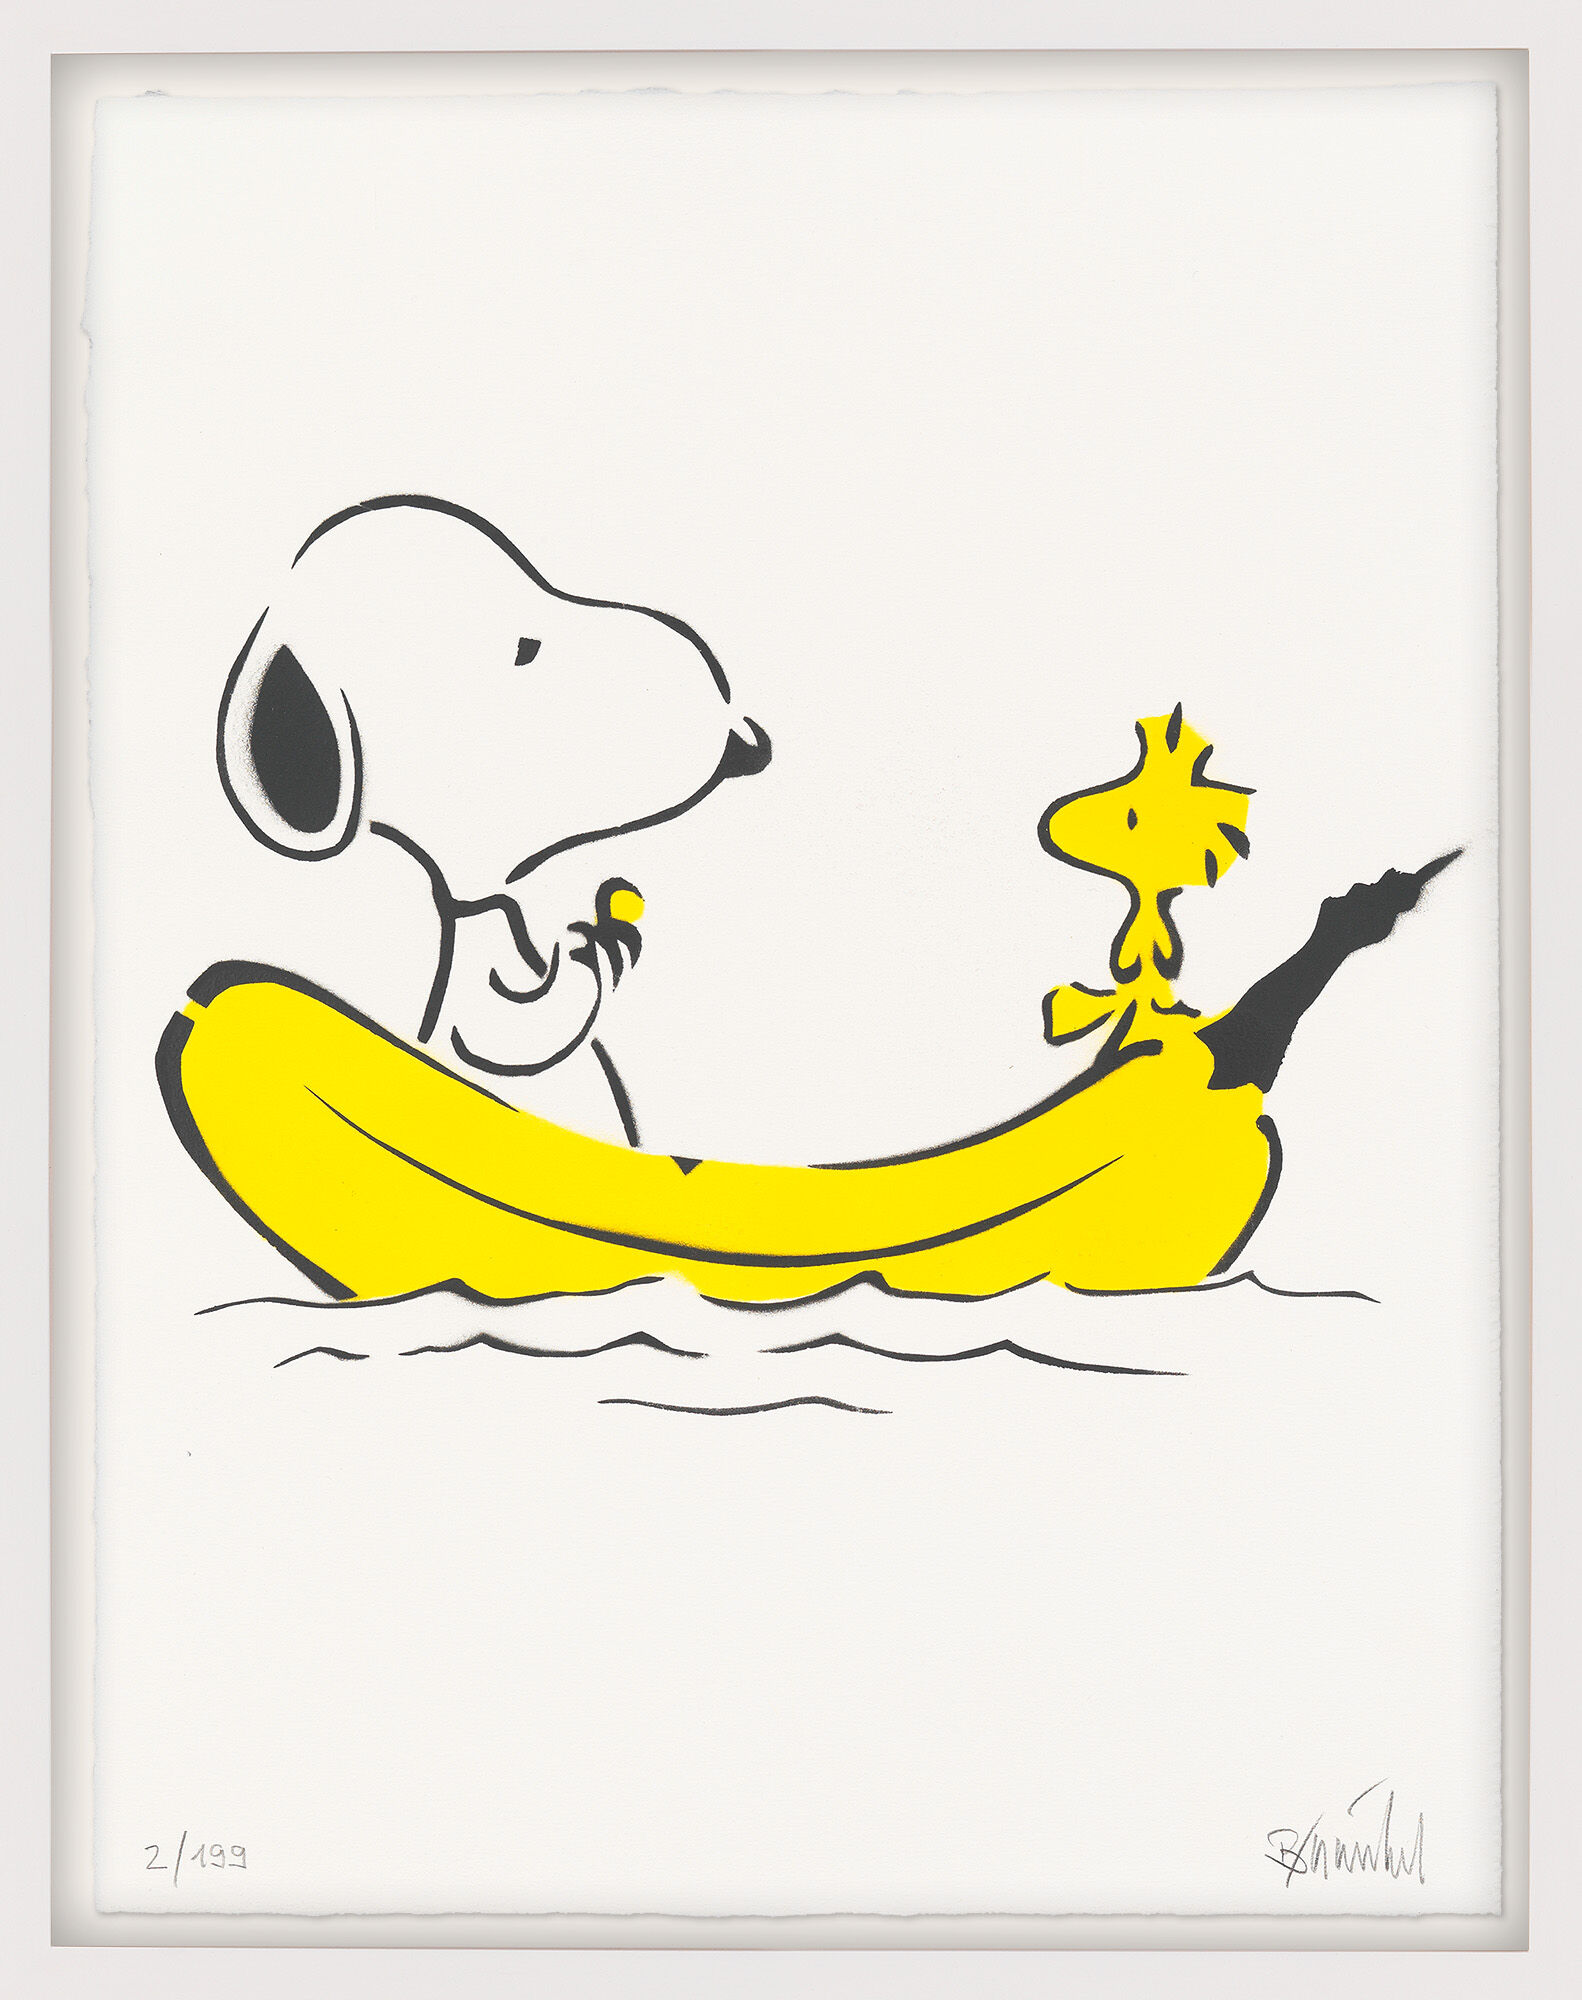 Beeld "Snoopy & Woodstock" (2022) von Thomas Baumgärtel